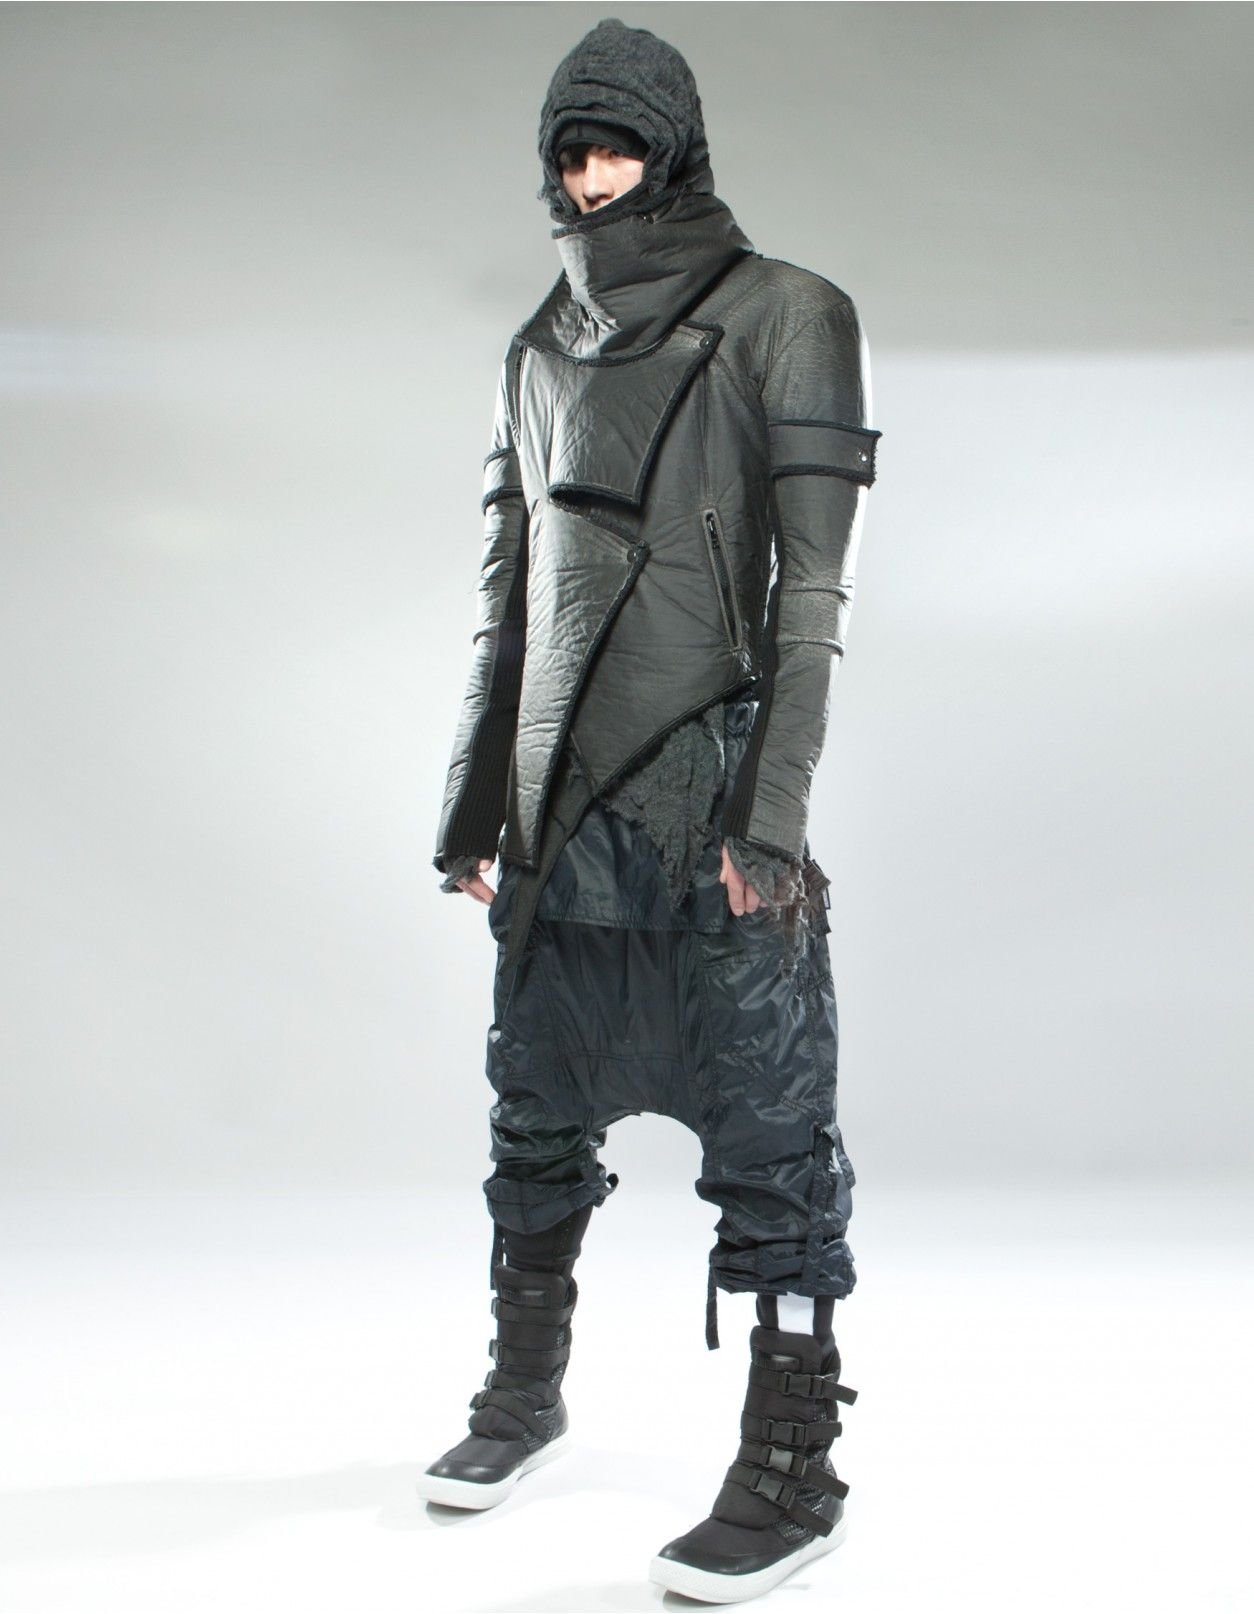 Cyberpunk clothes brands фото 115